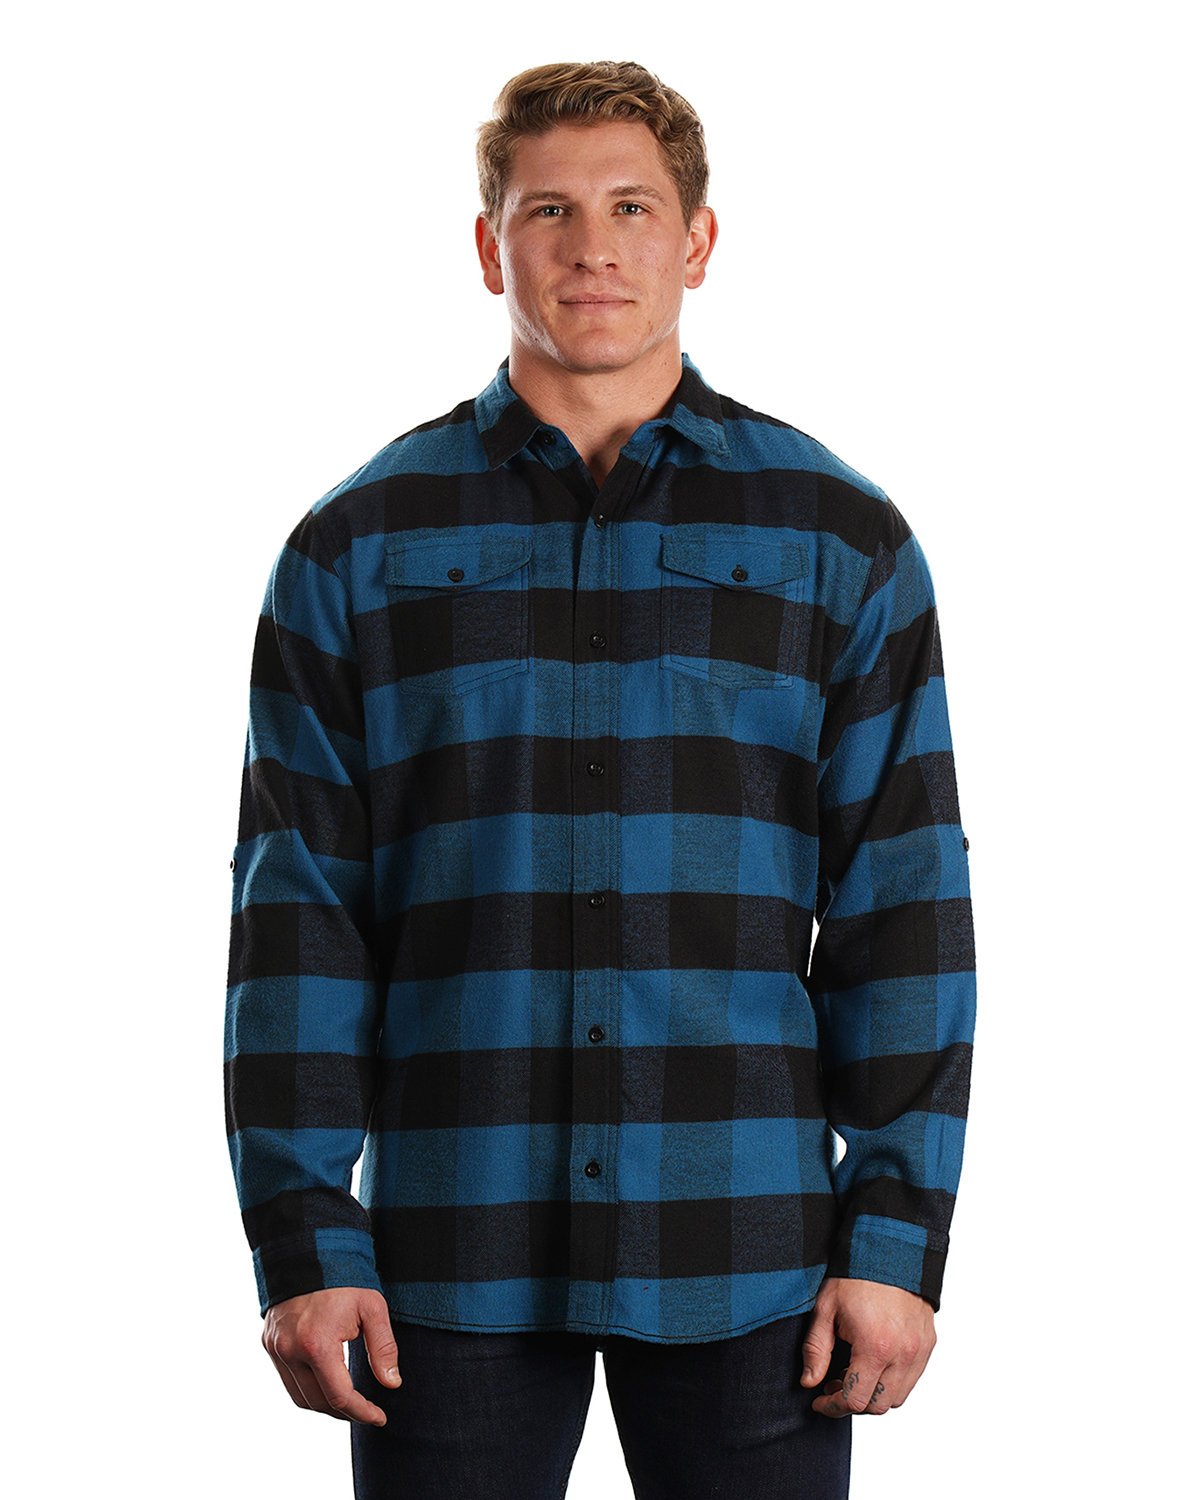 Burnside Men's Plaid Flannel Shirt blue/ black 